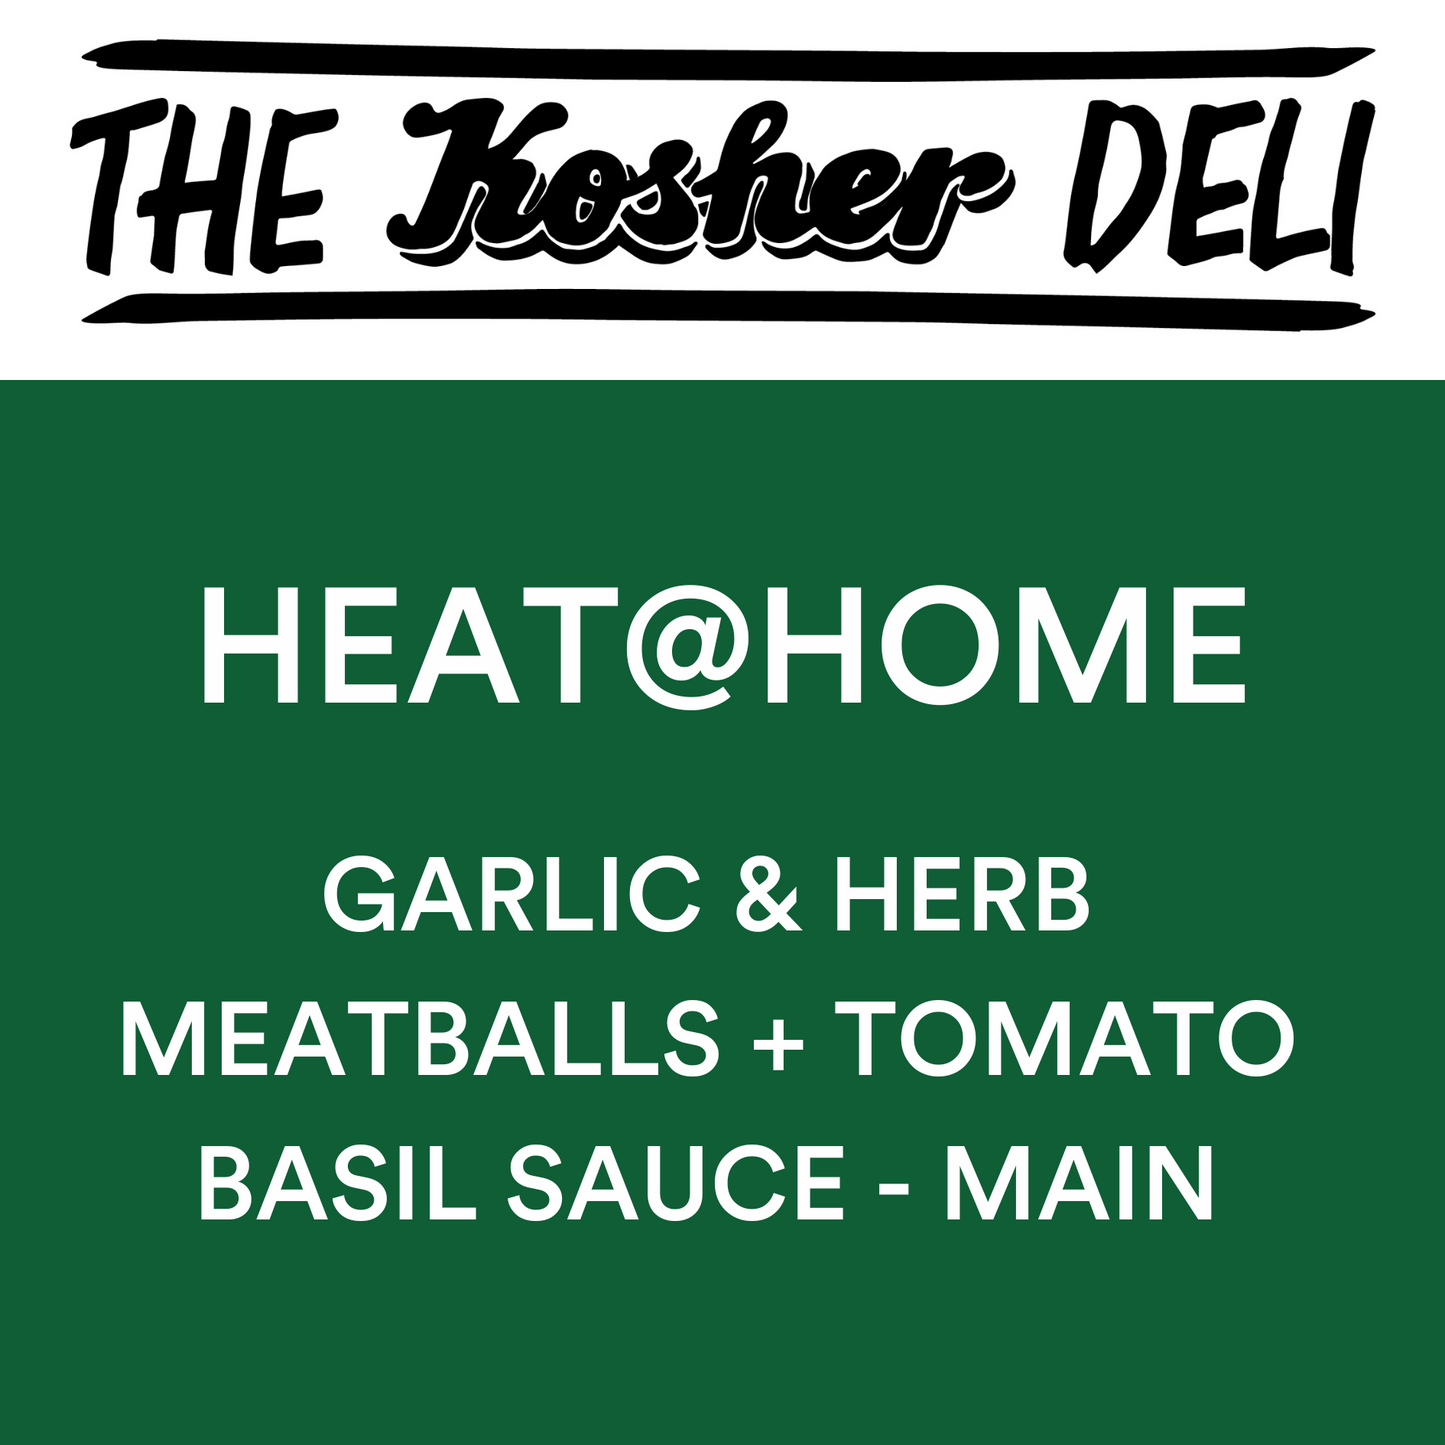 Garlic & Herb meatballs + tomato basil sauce - MAIN